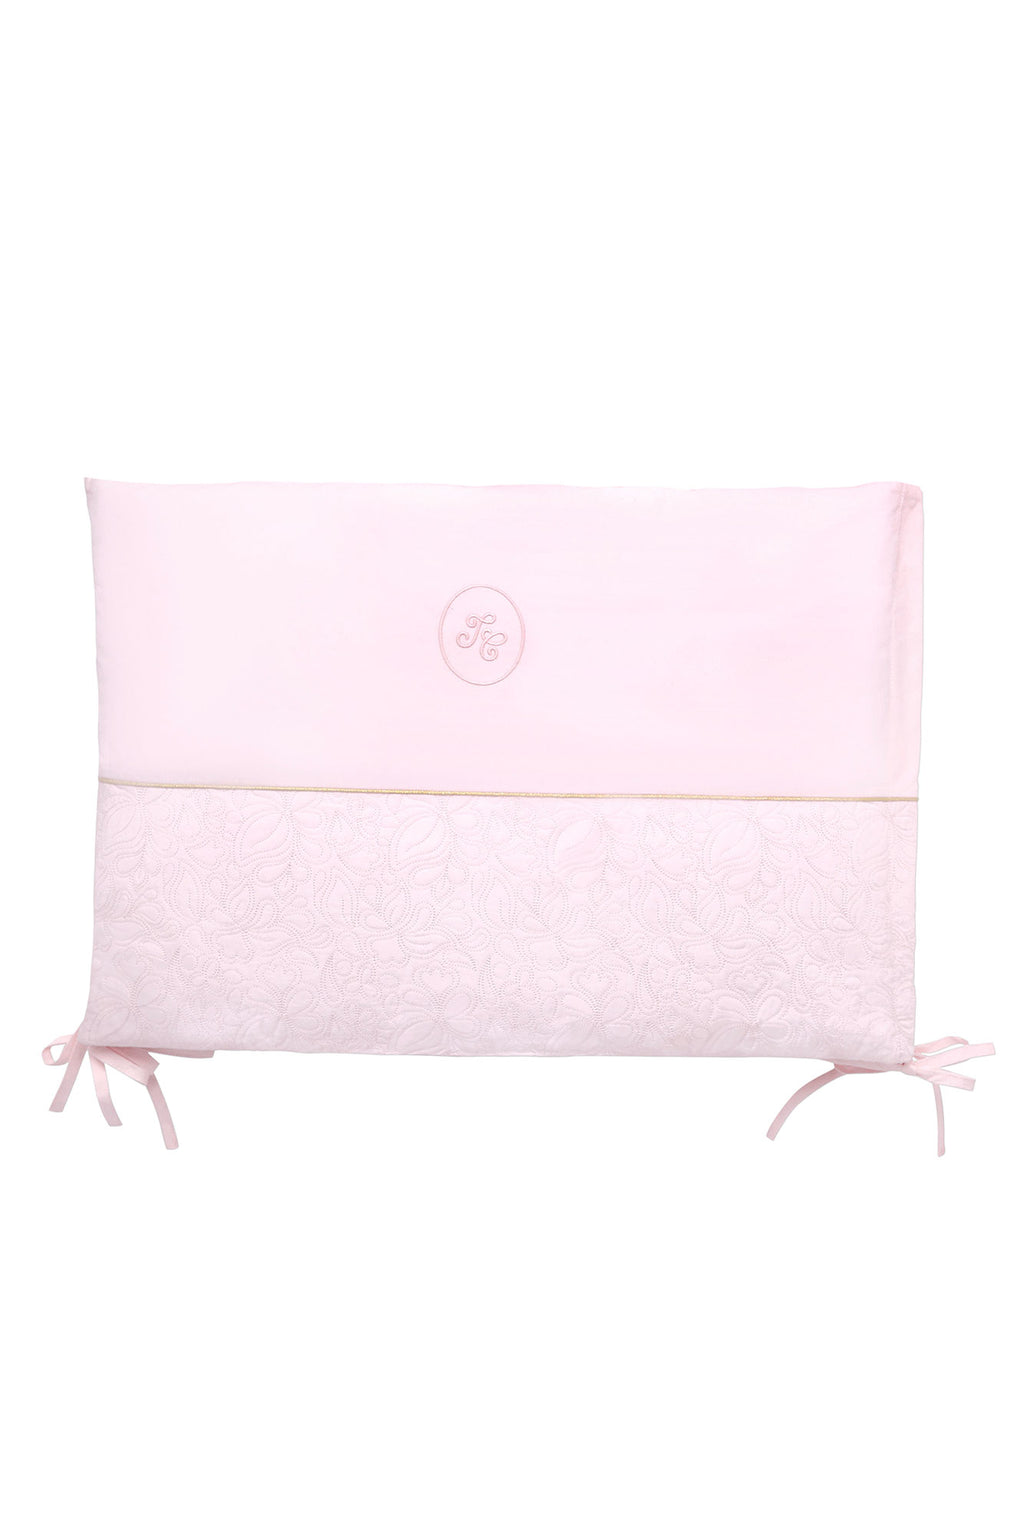 Adjustable bed bumper - Delicacy Pale pink